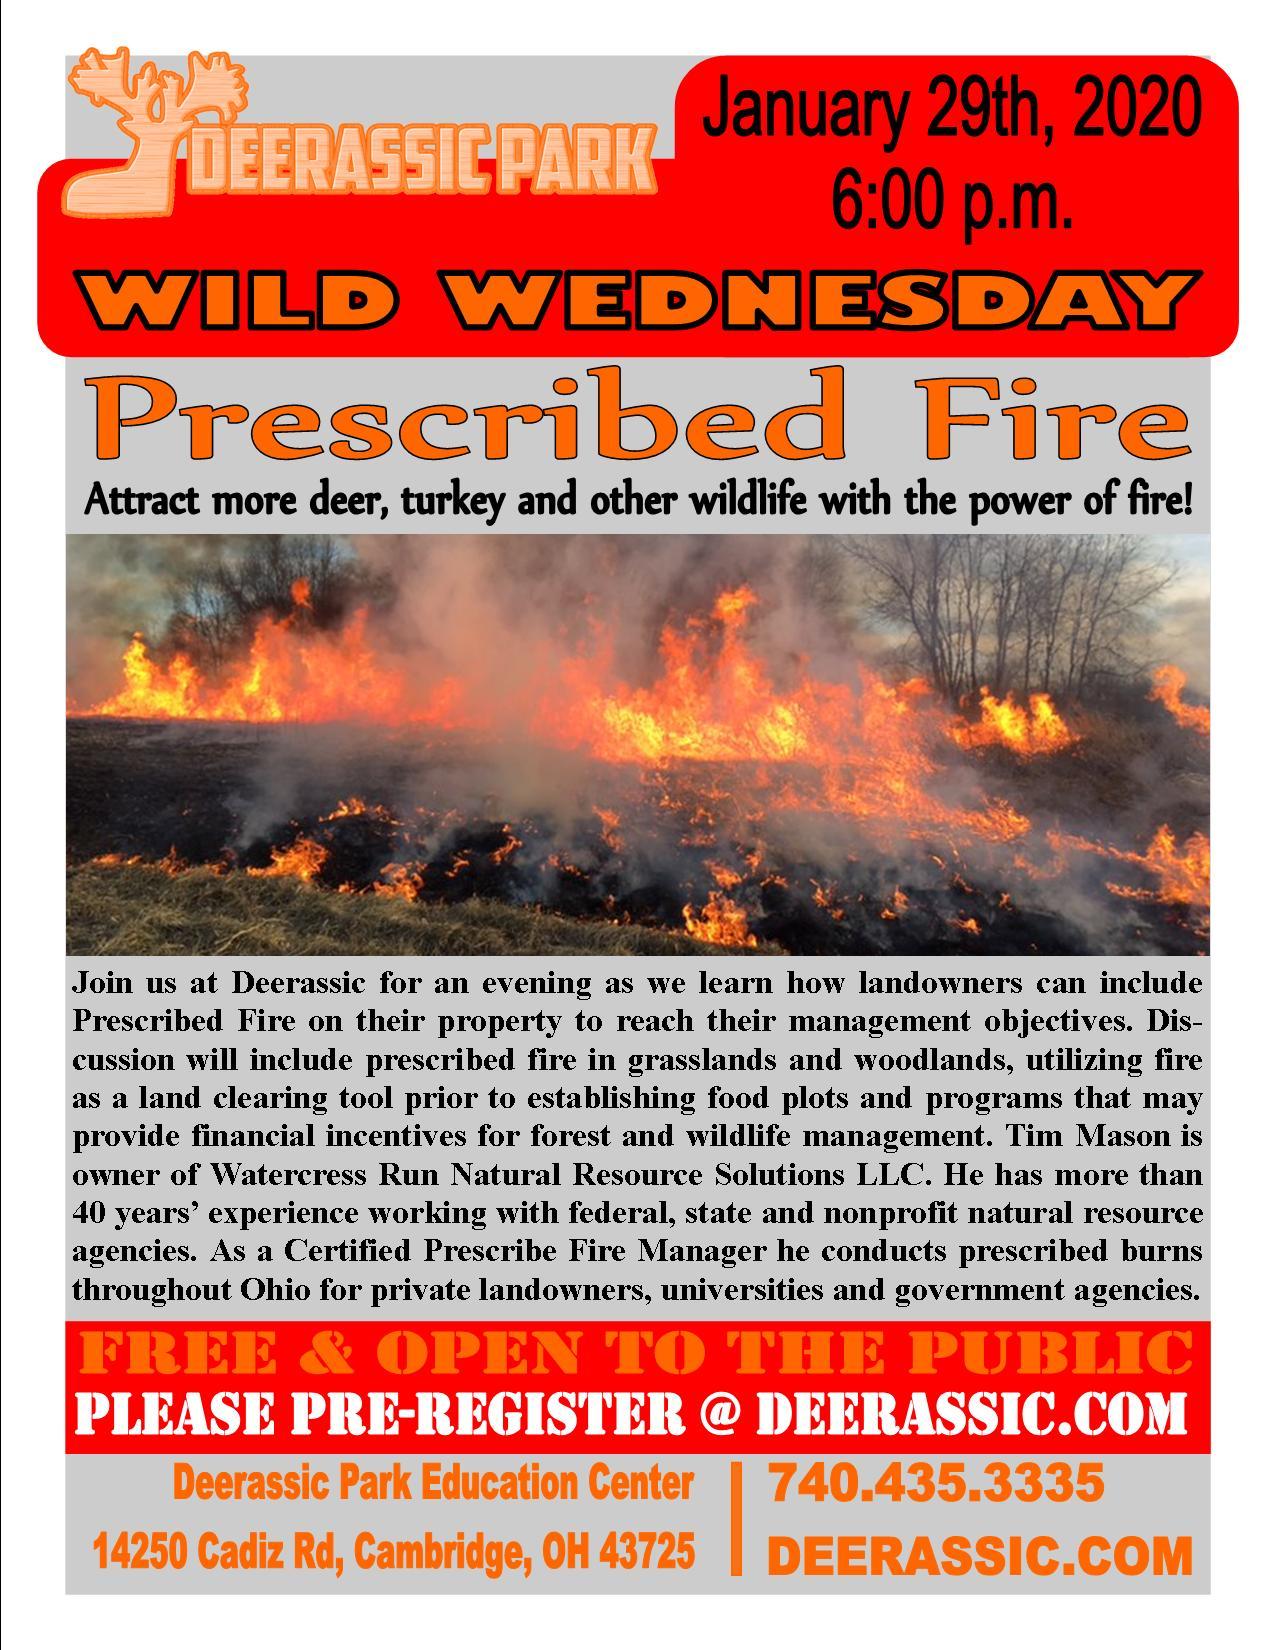 Wild Wednesday - Prescribed Fire